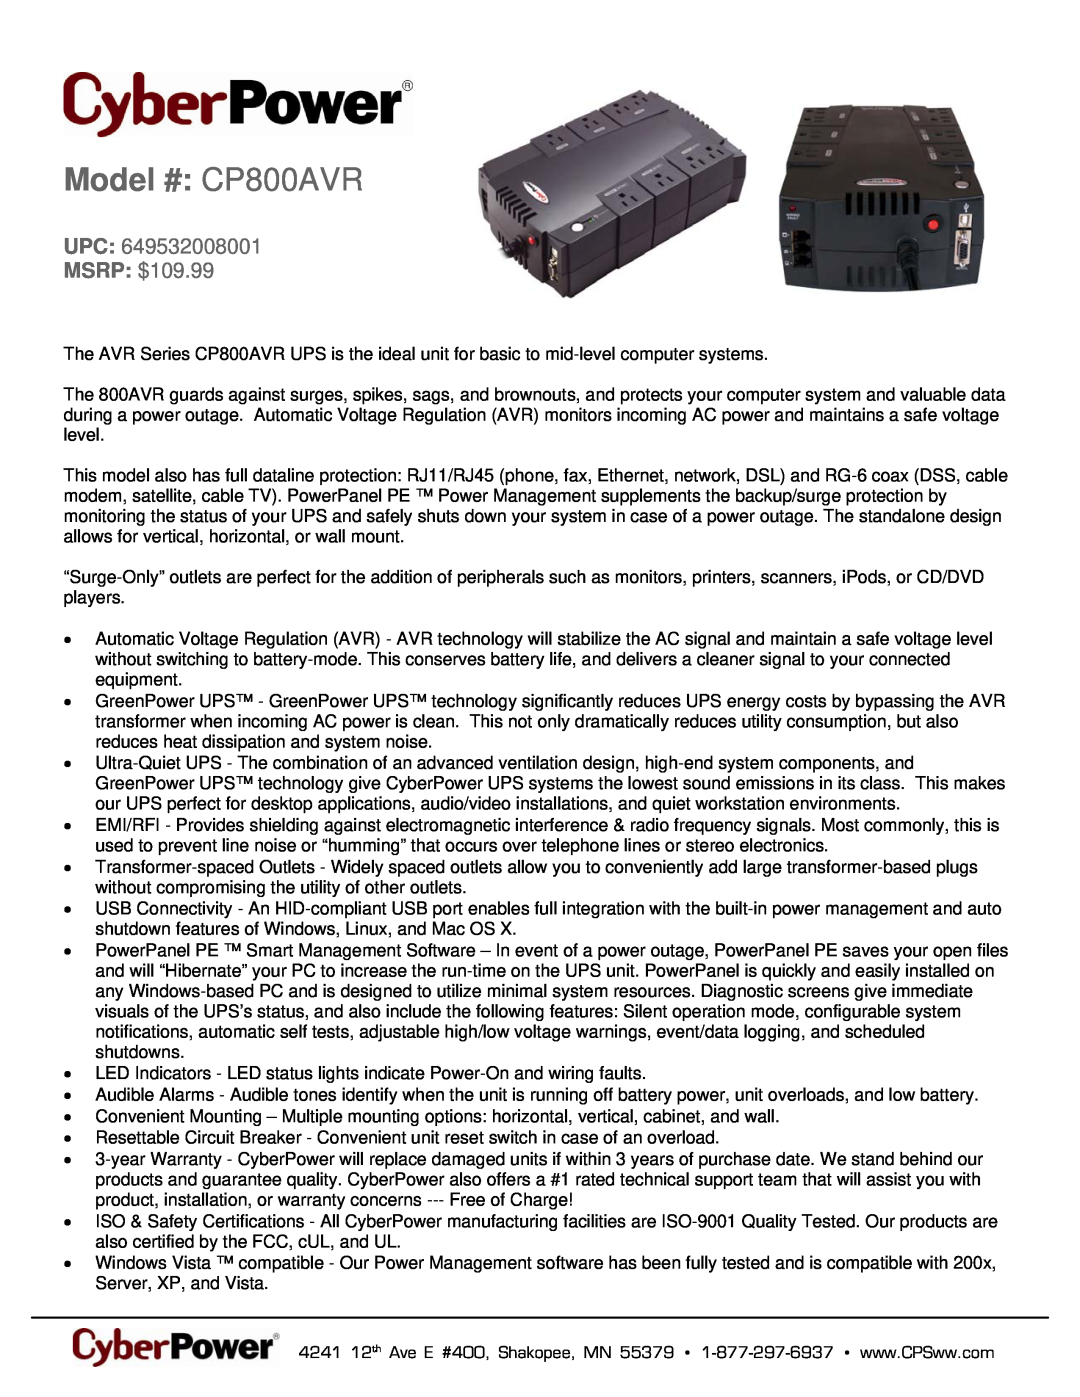 CyberPower Systems 649532008001 warranty Model # CP800AVR, UPC MSRP $109.99 